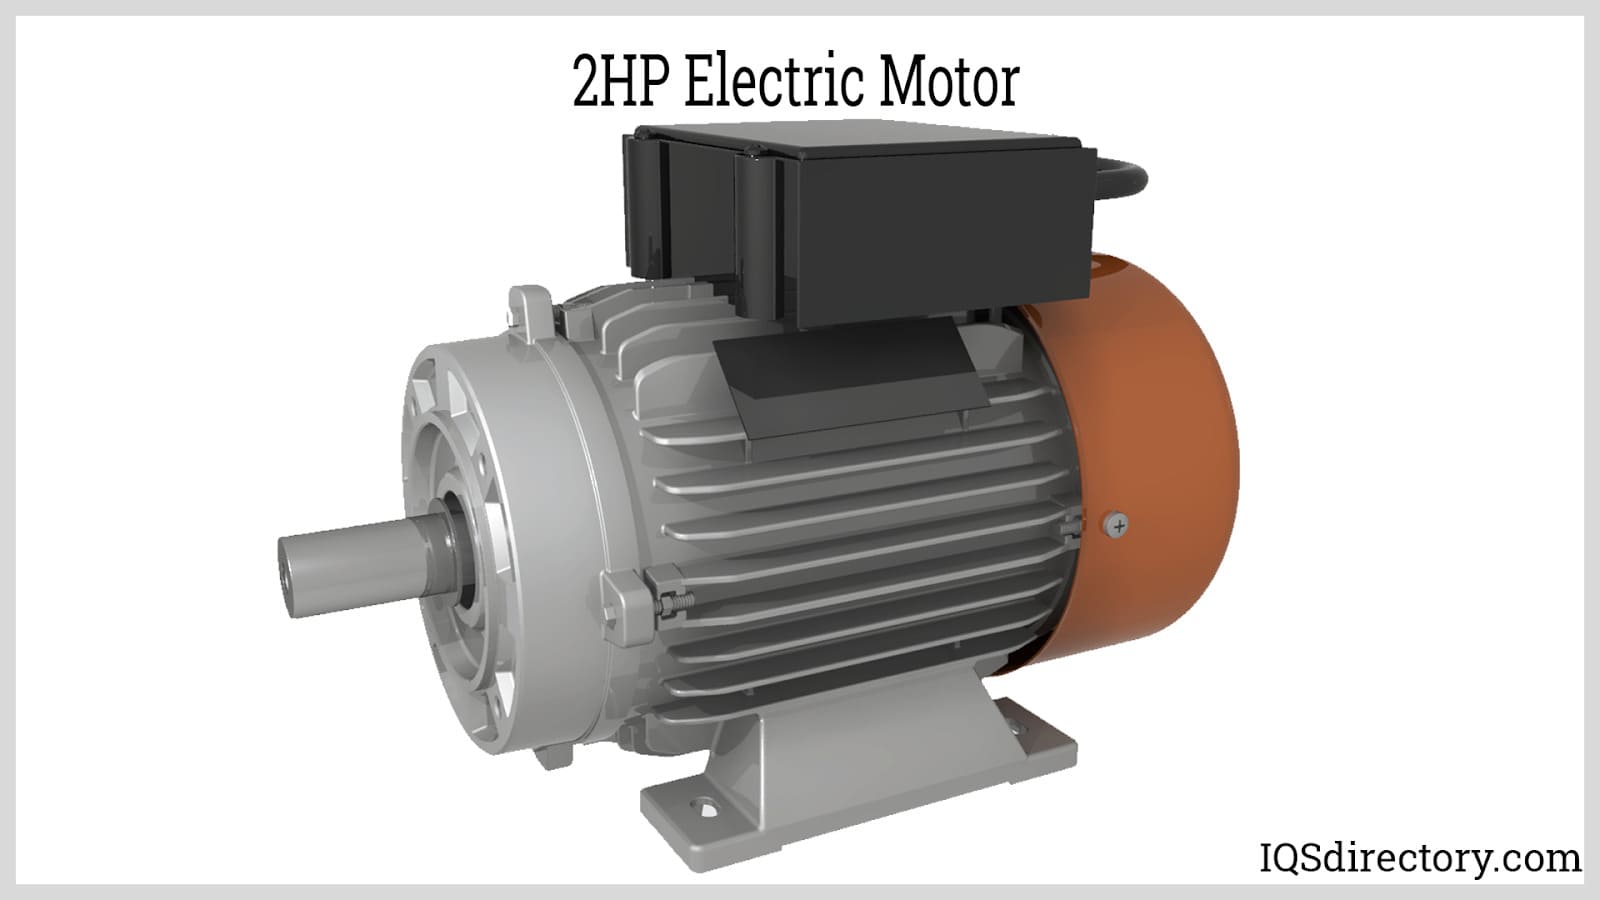 2HP Electric Motor